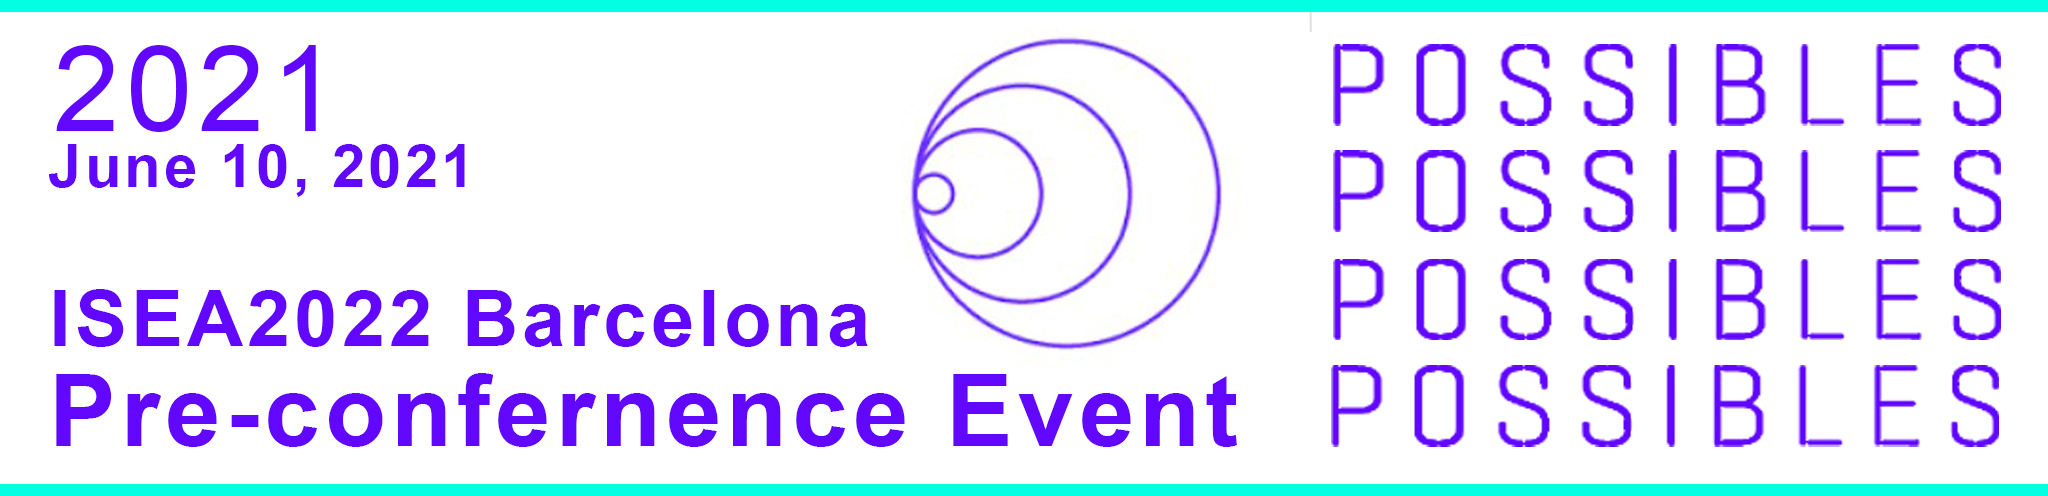 2021 ISEA2022-Pre-conference event header